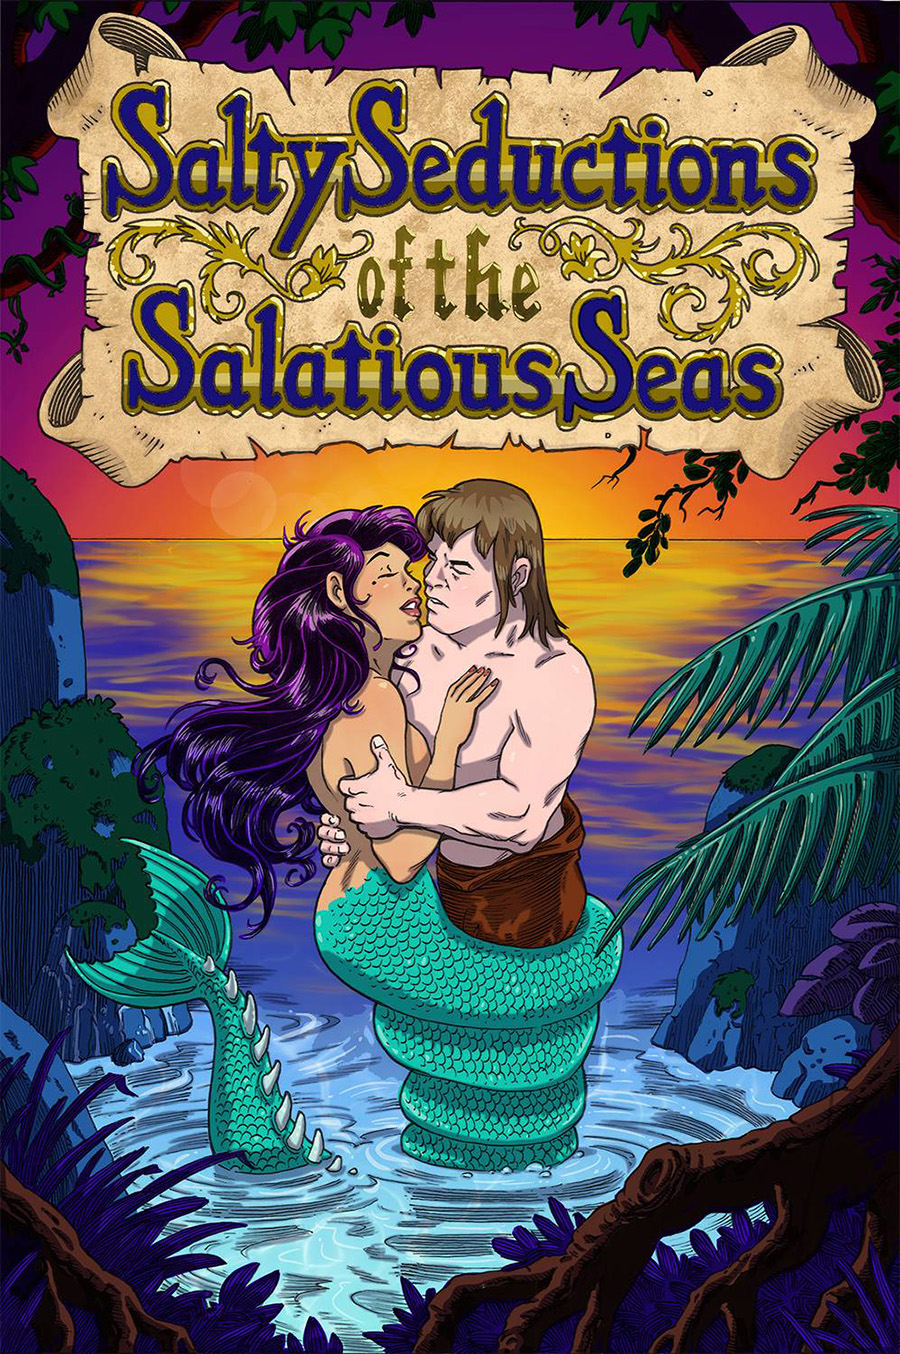 Salty Seductions Of The Salatious Seas